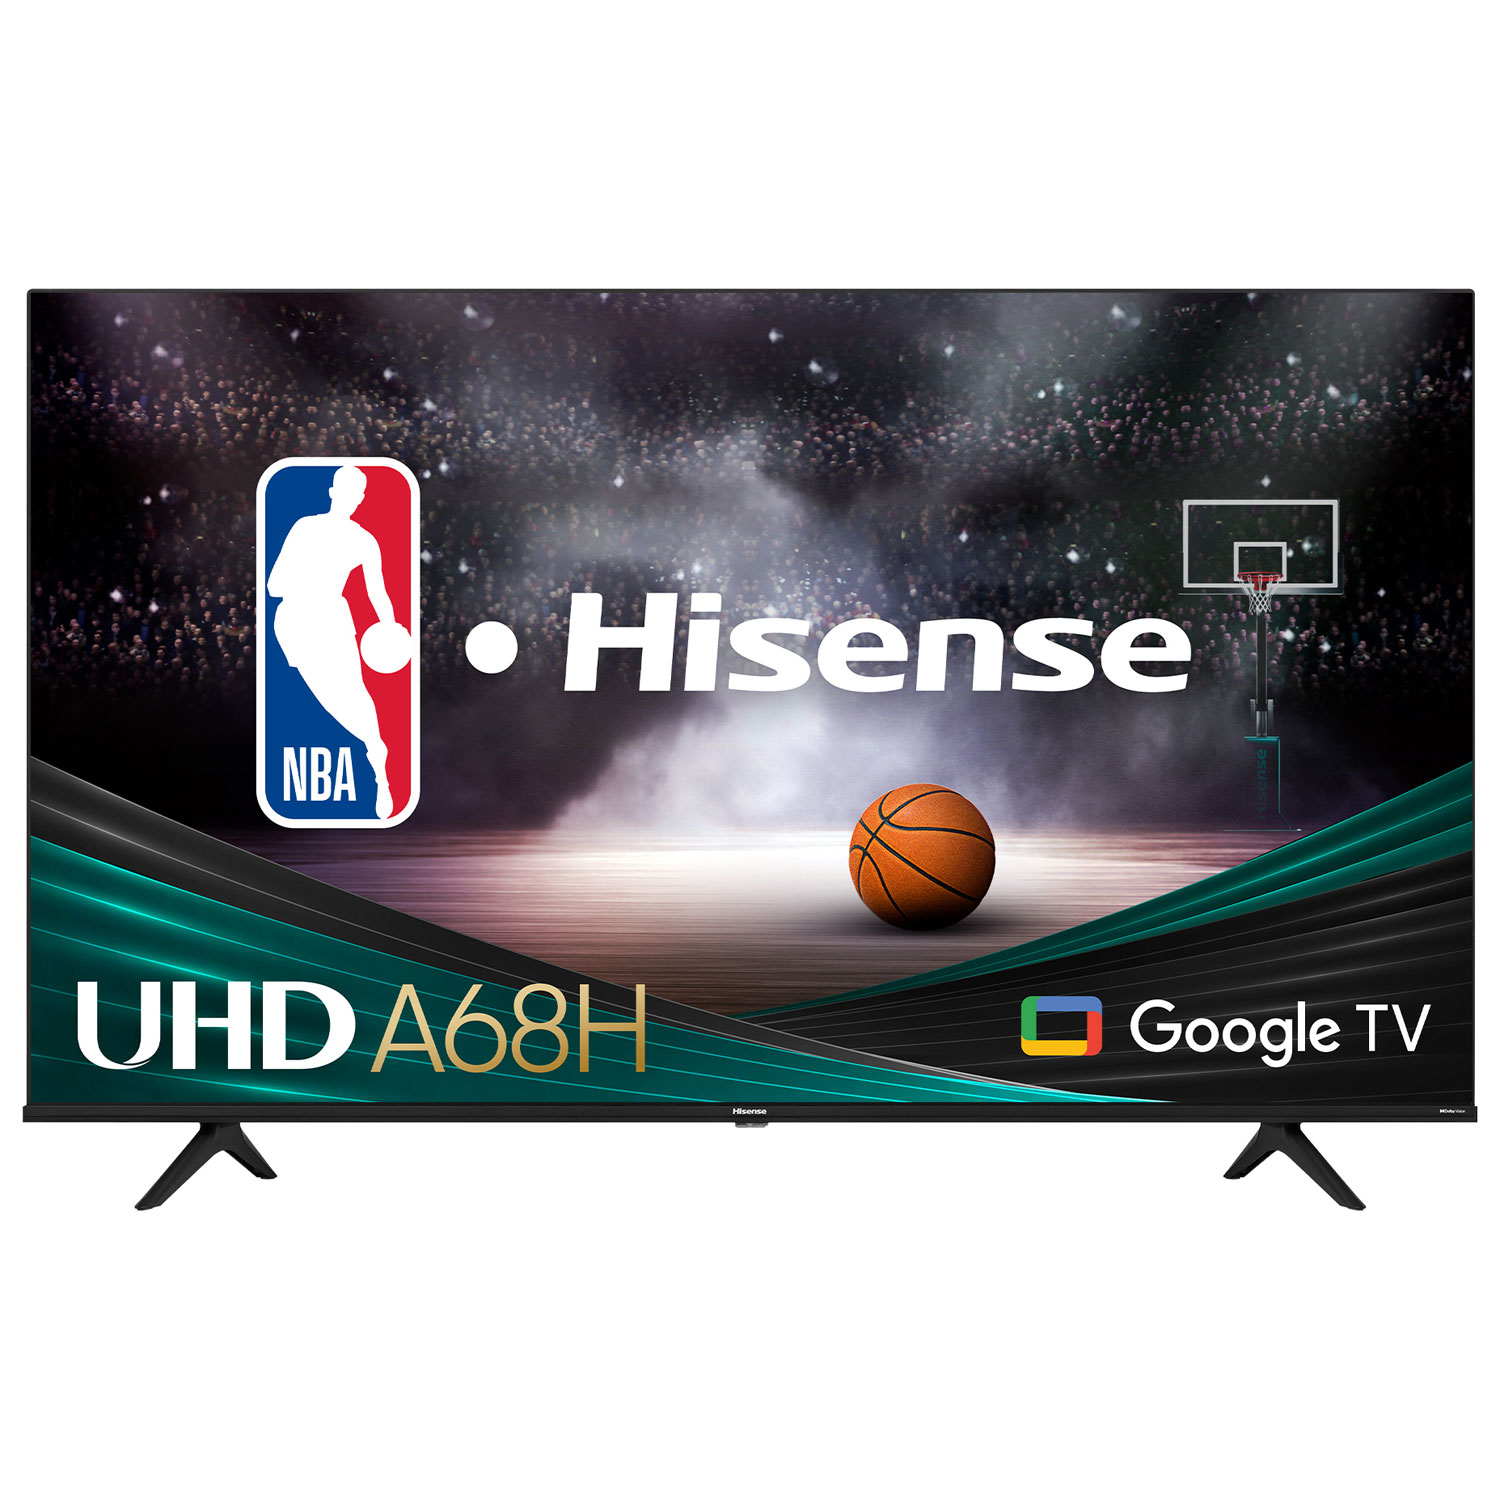 Hisense A68H 43" 4K UHD HDR LCD Smart Google TV (43A68H) - 2022